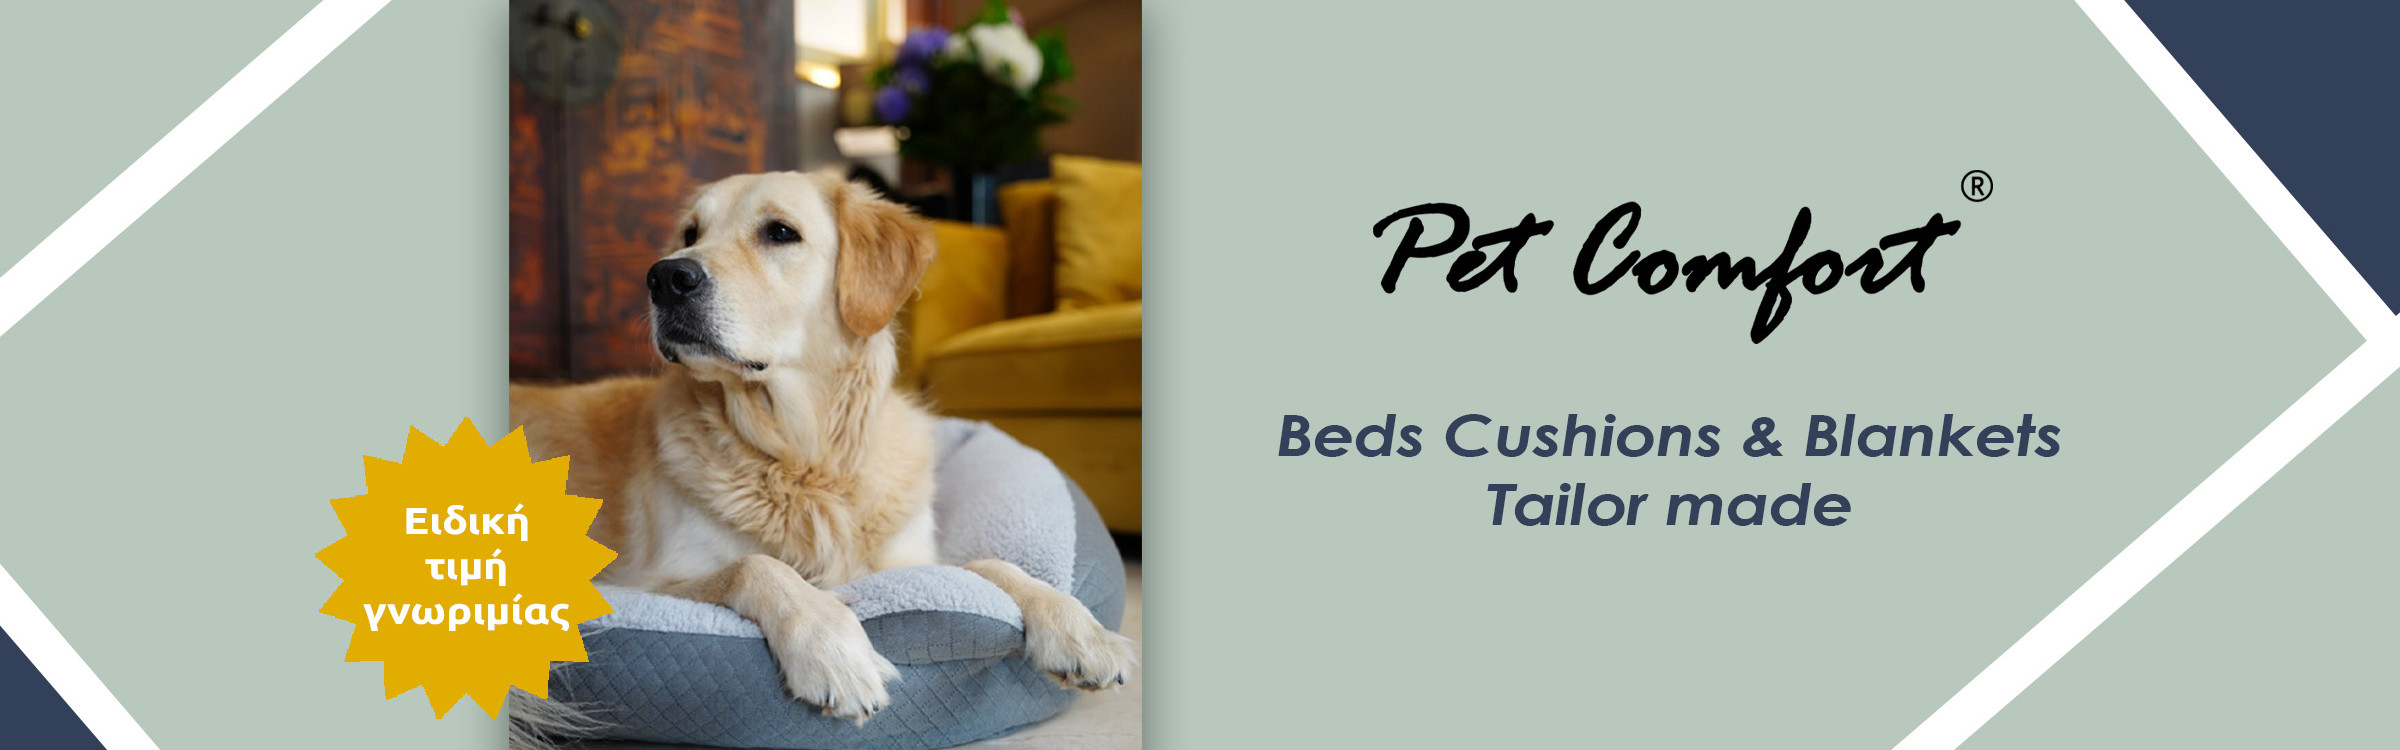 Dog Cat Bed Pet Comfort